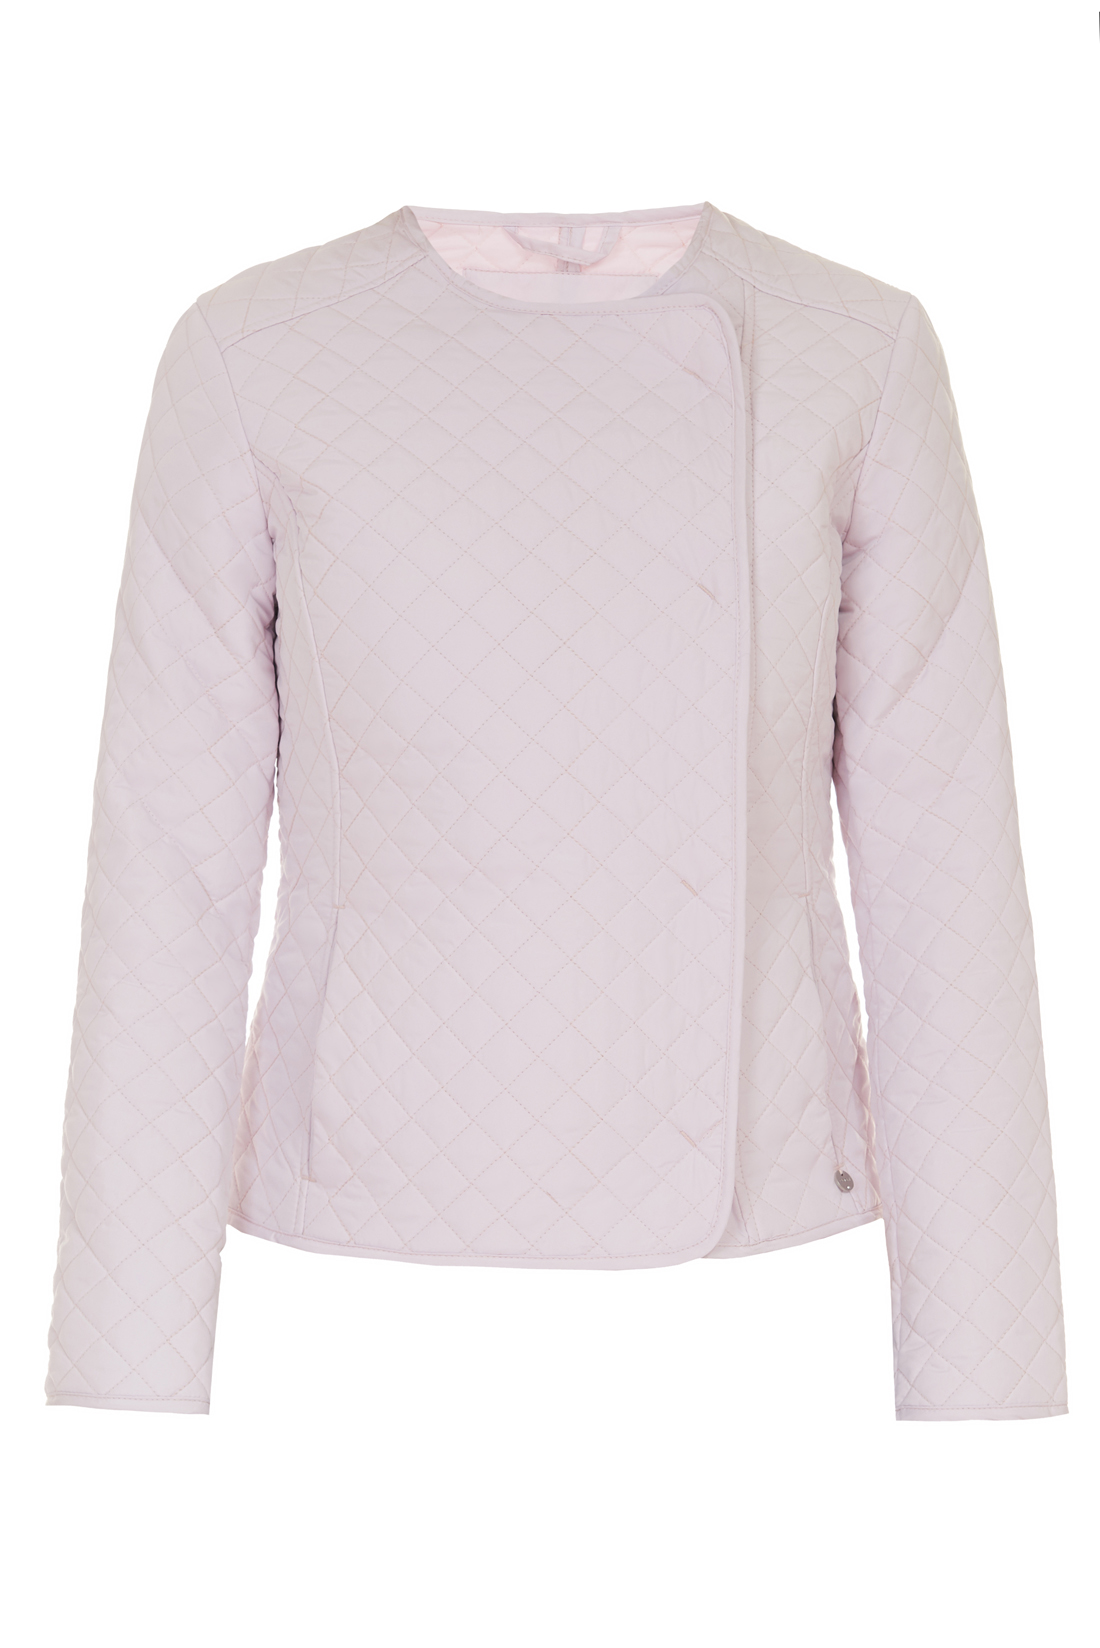 Стёганая куртка-косуха (арт. baon B038005), размер XL, цвет розовый Стёганая куртка-косуха (арт. baon B038005) - фото 3